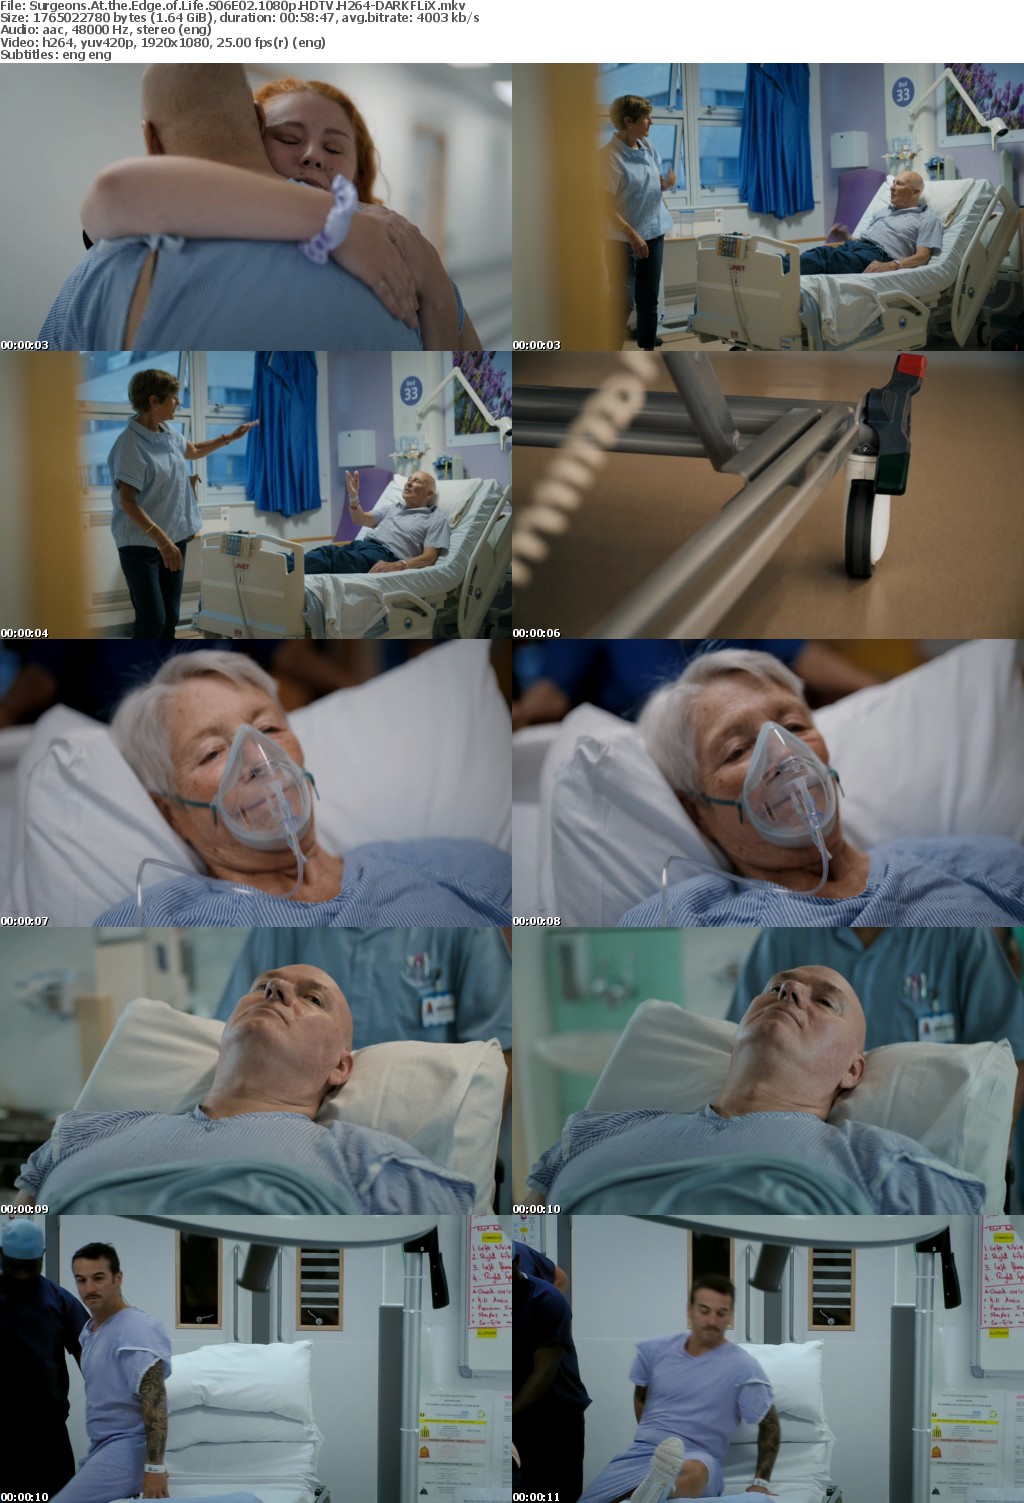 Surgeons At the Edge of Life S06E02 1080p HDTV H264-DARKFLiX